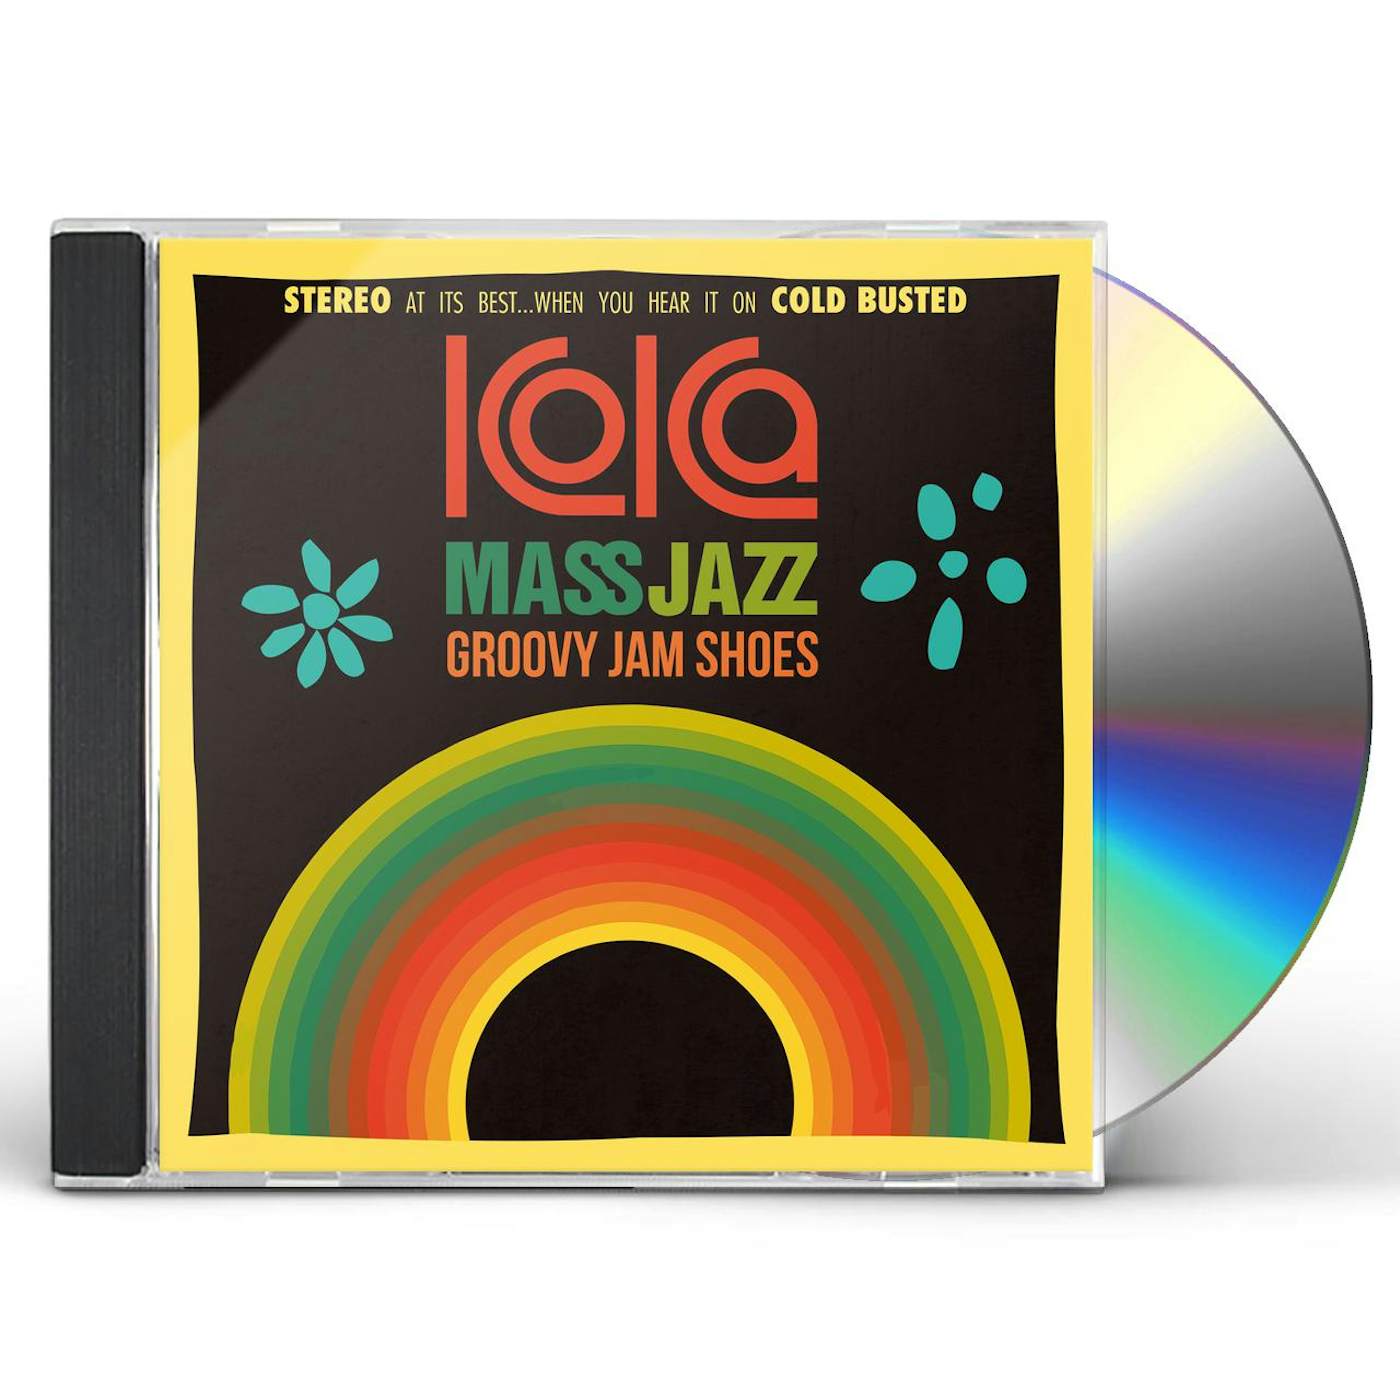 Koka Mass Jazz GROOVY JAM SHOES CD